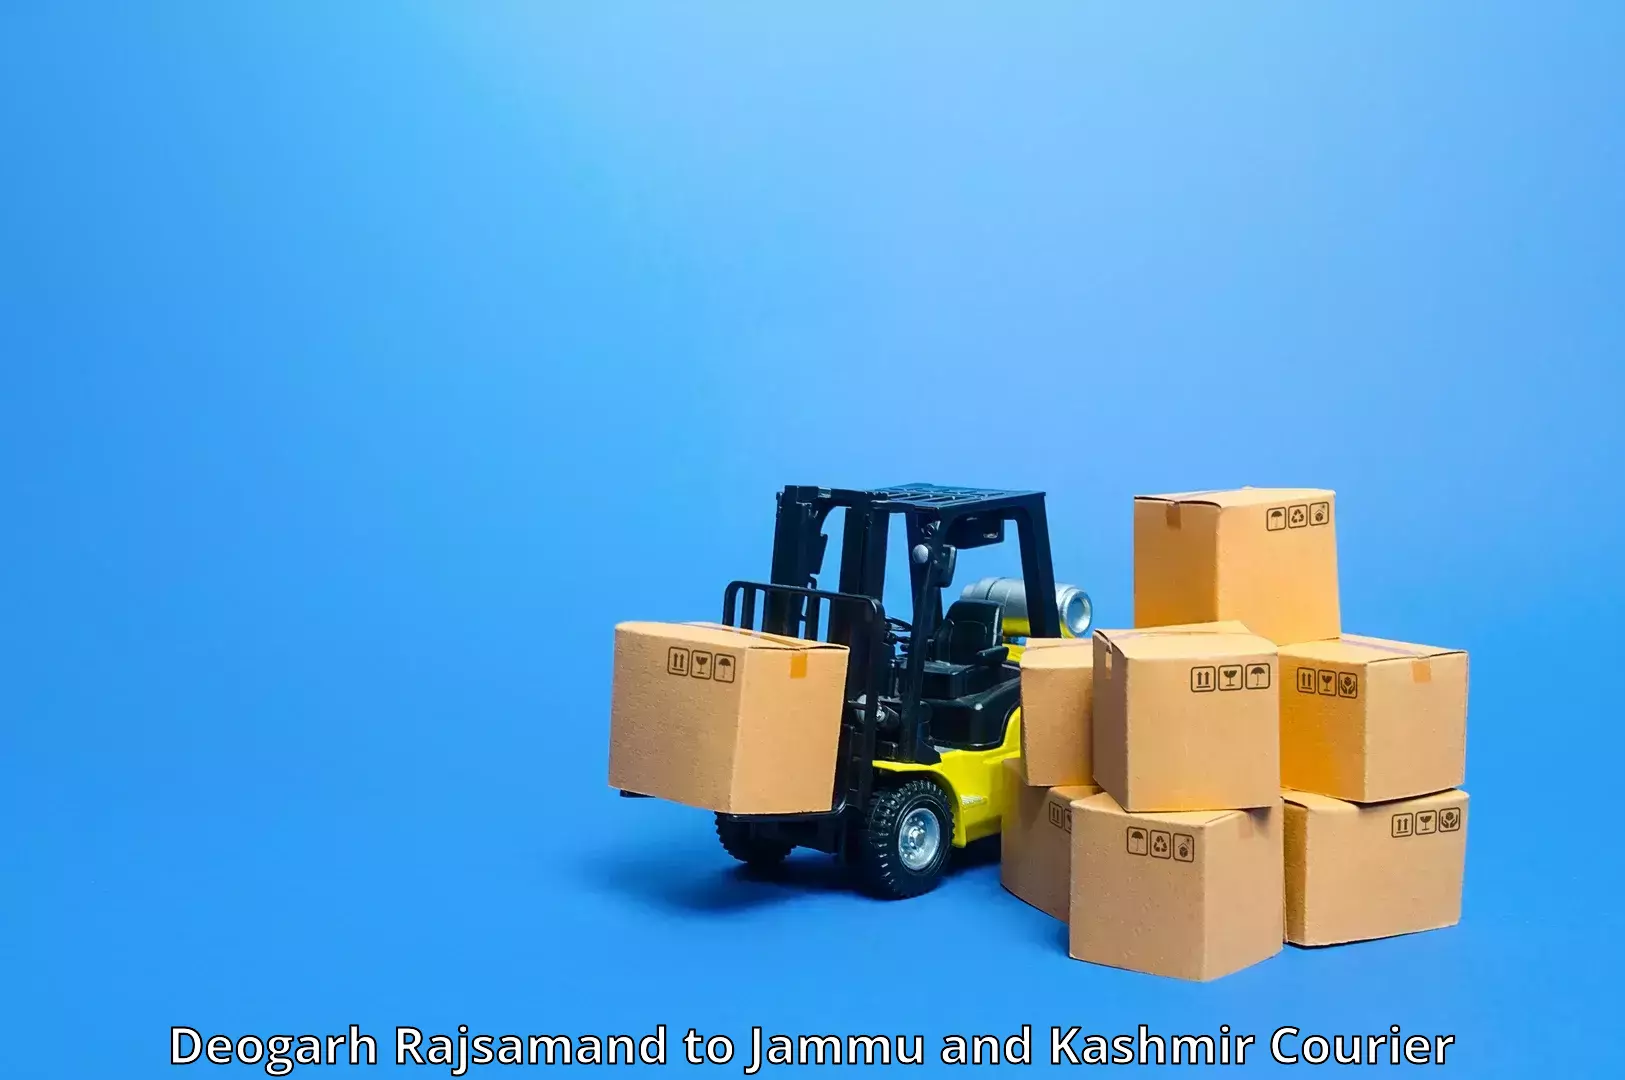 Express delivery capabilities Deogarh Rajsamand to Ramban